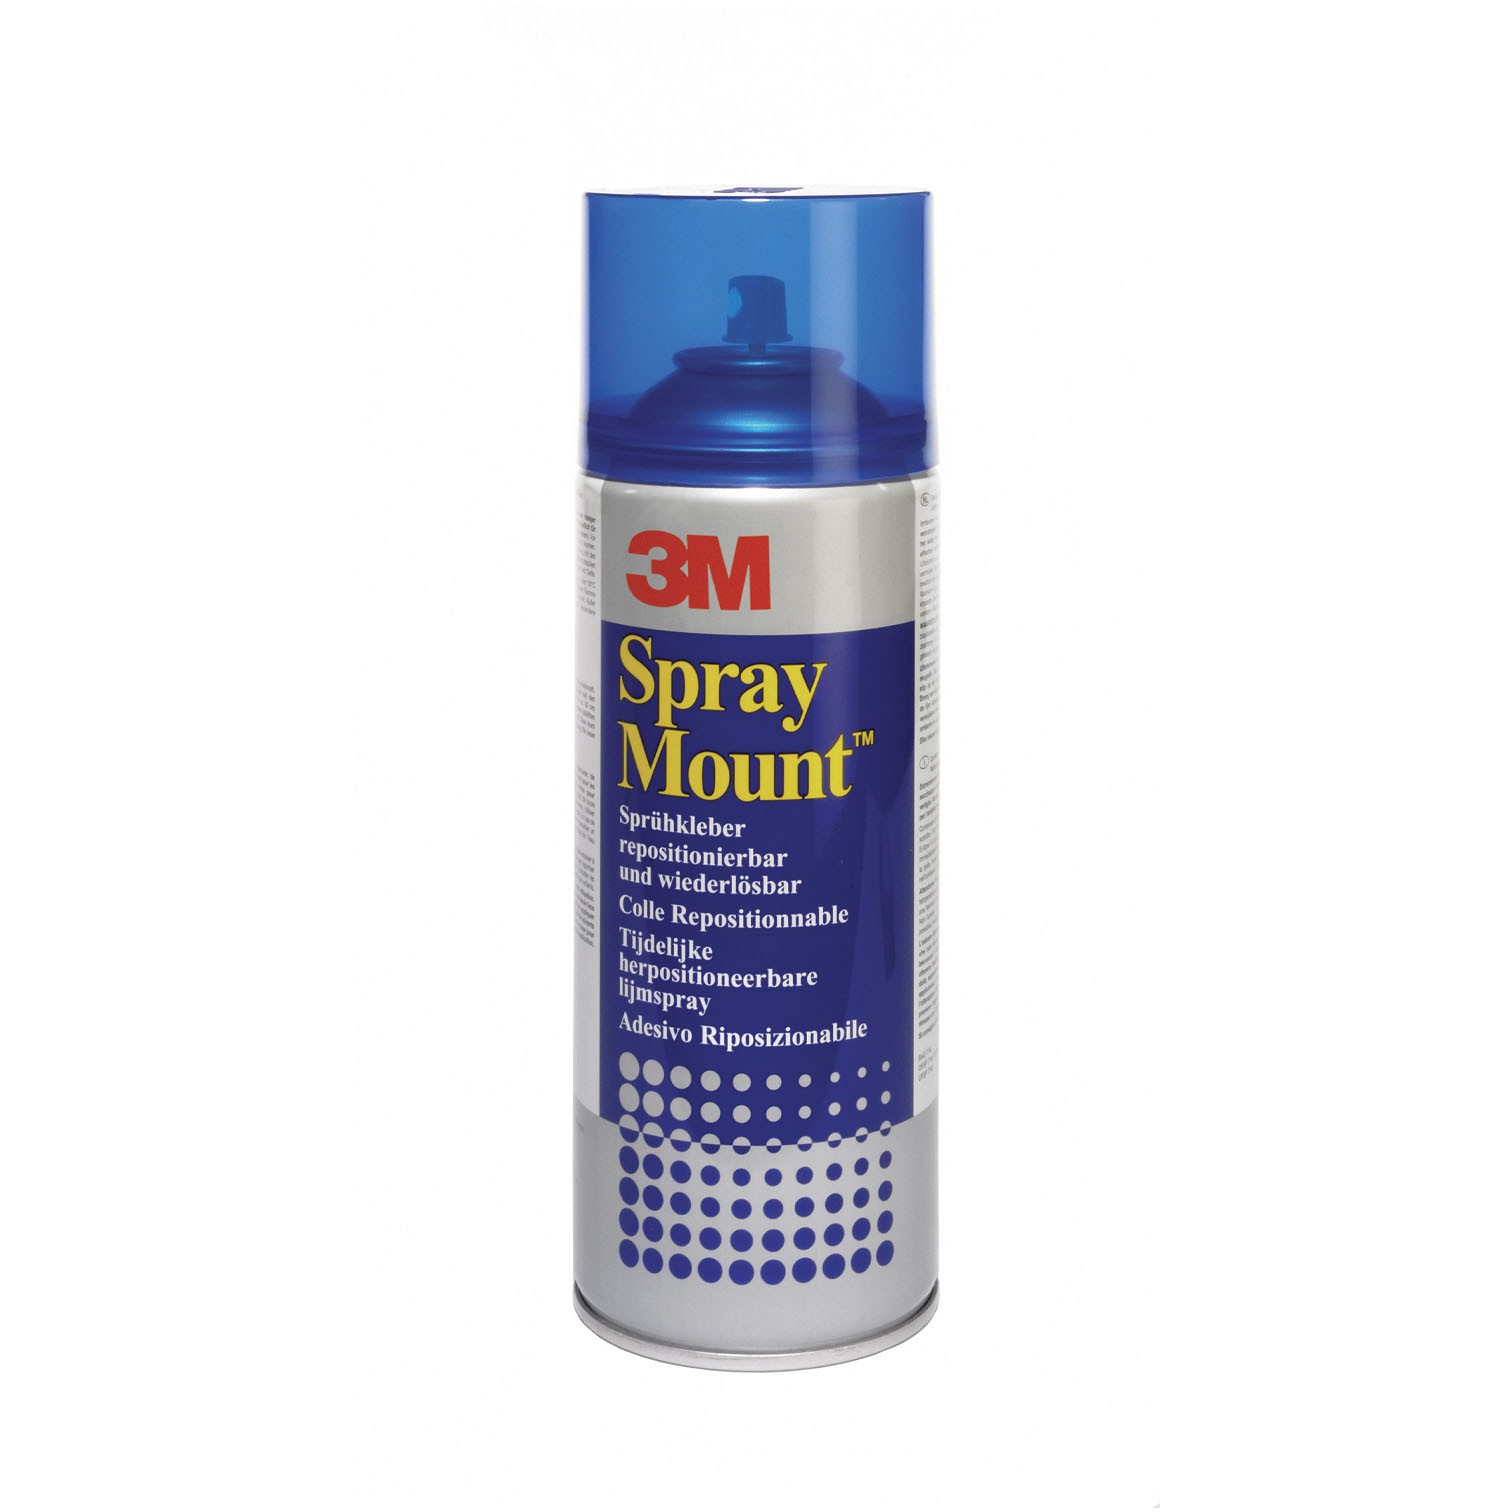 3M Spray Mount spraylim